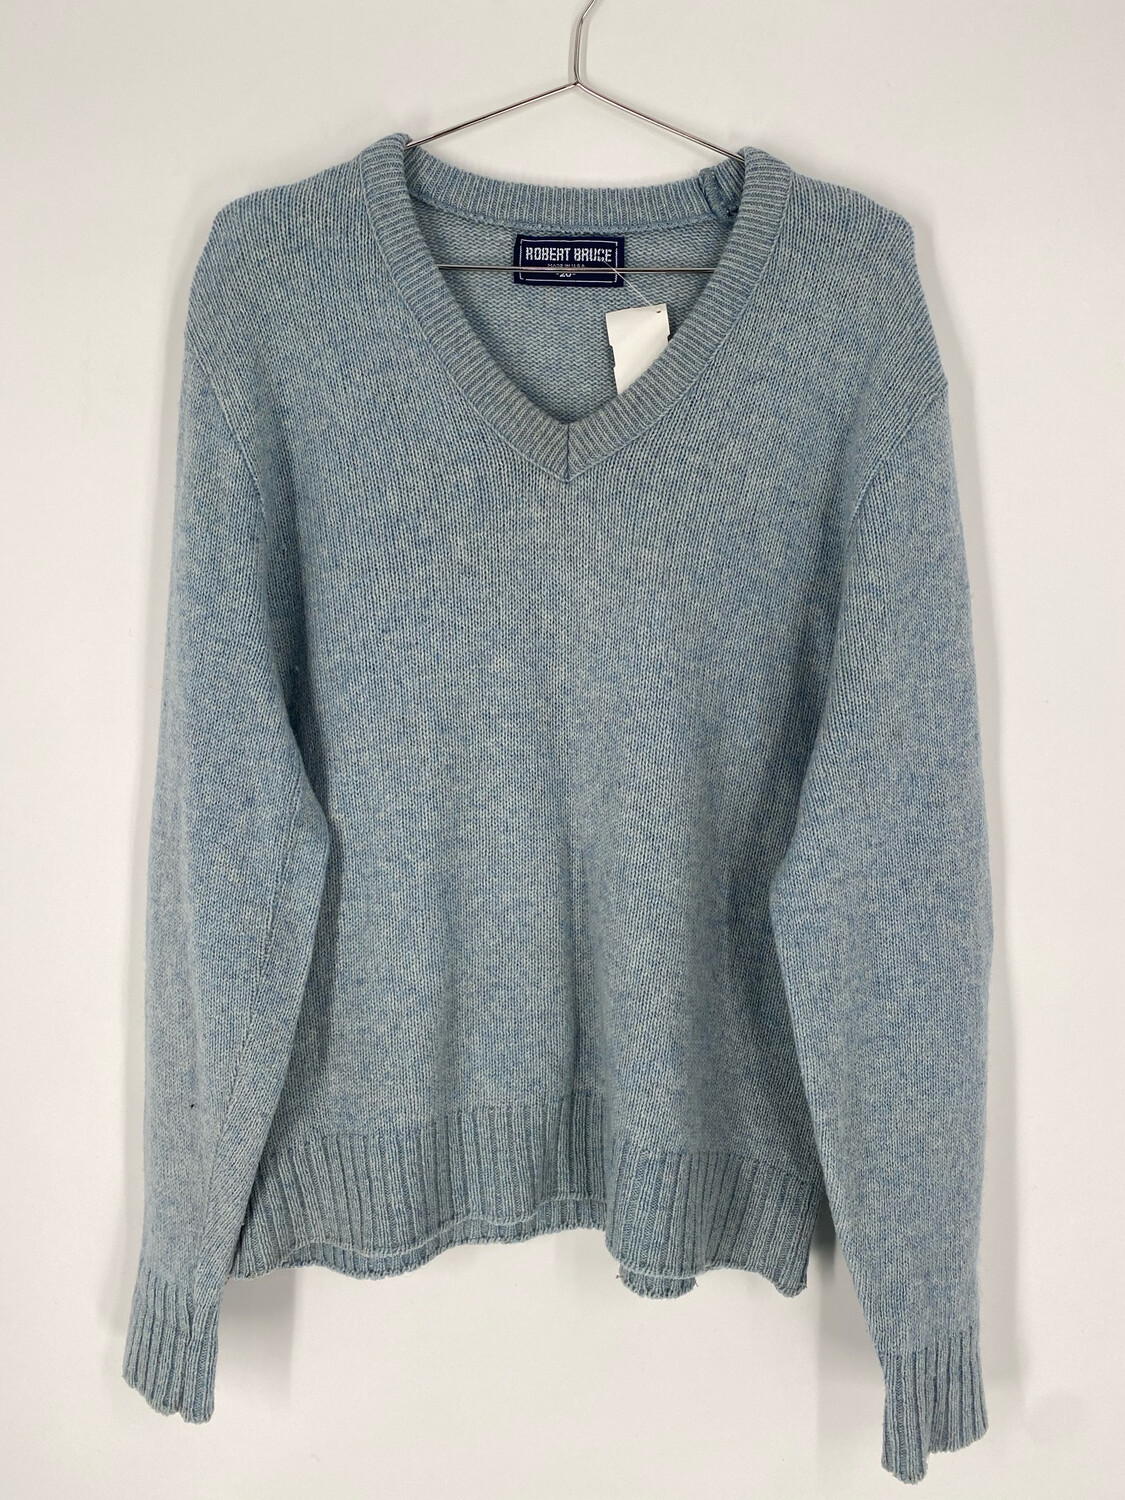 Robert Bruce Baby Blue V-Neck Sweater Size M